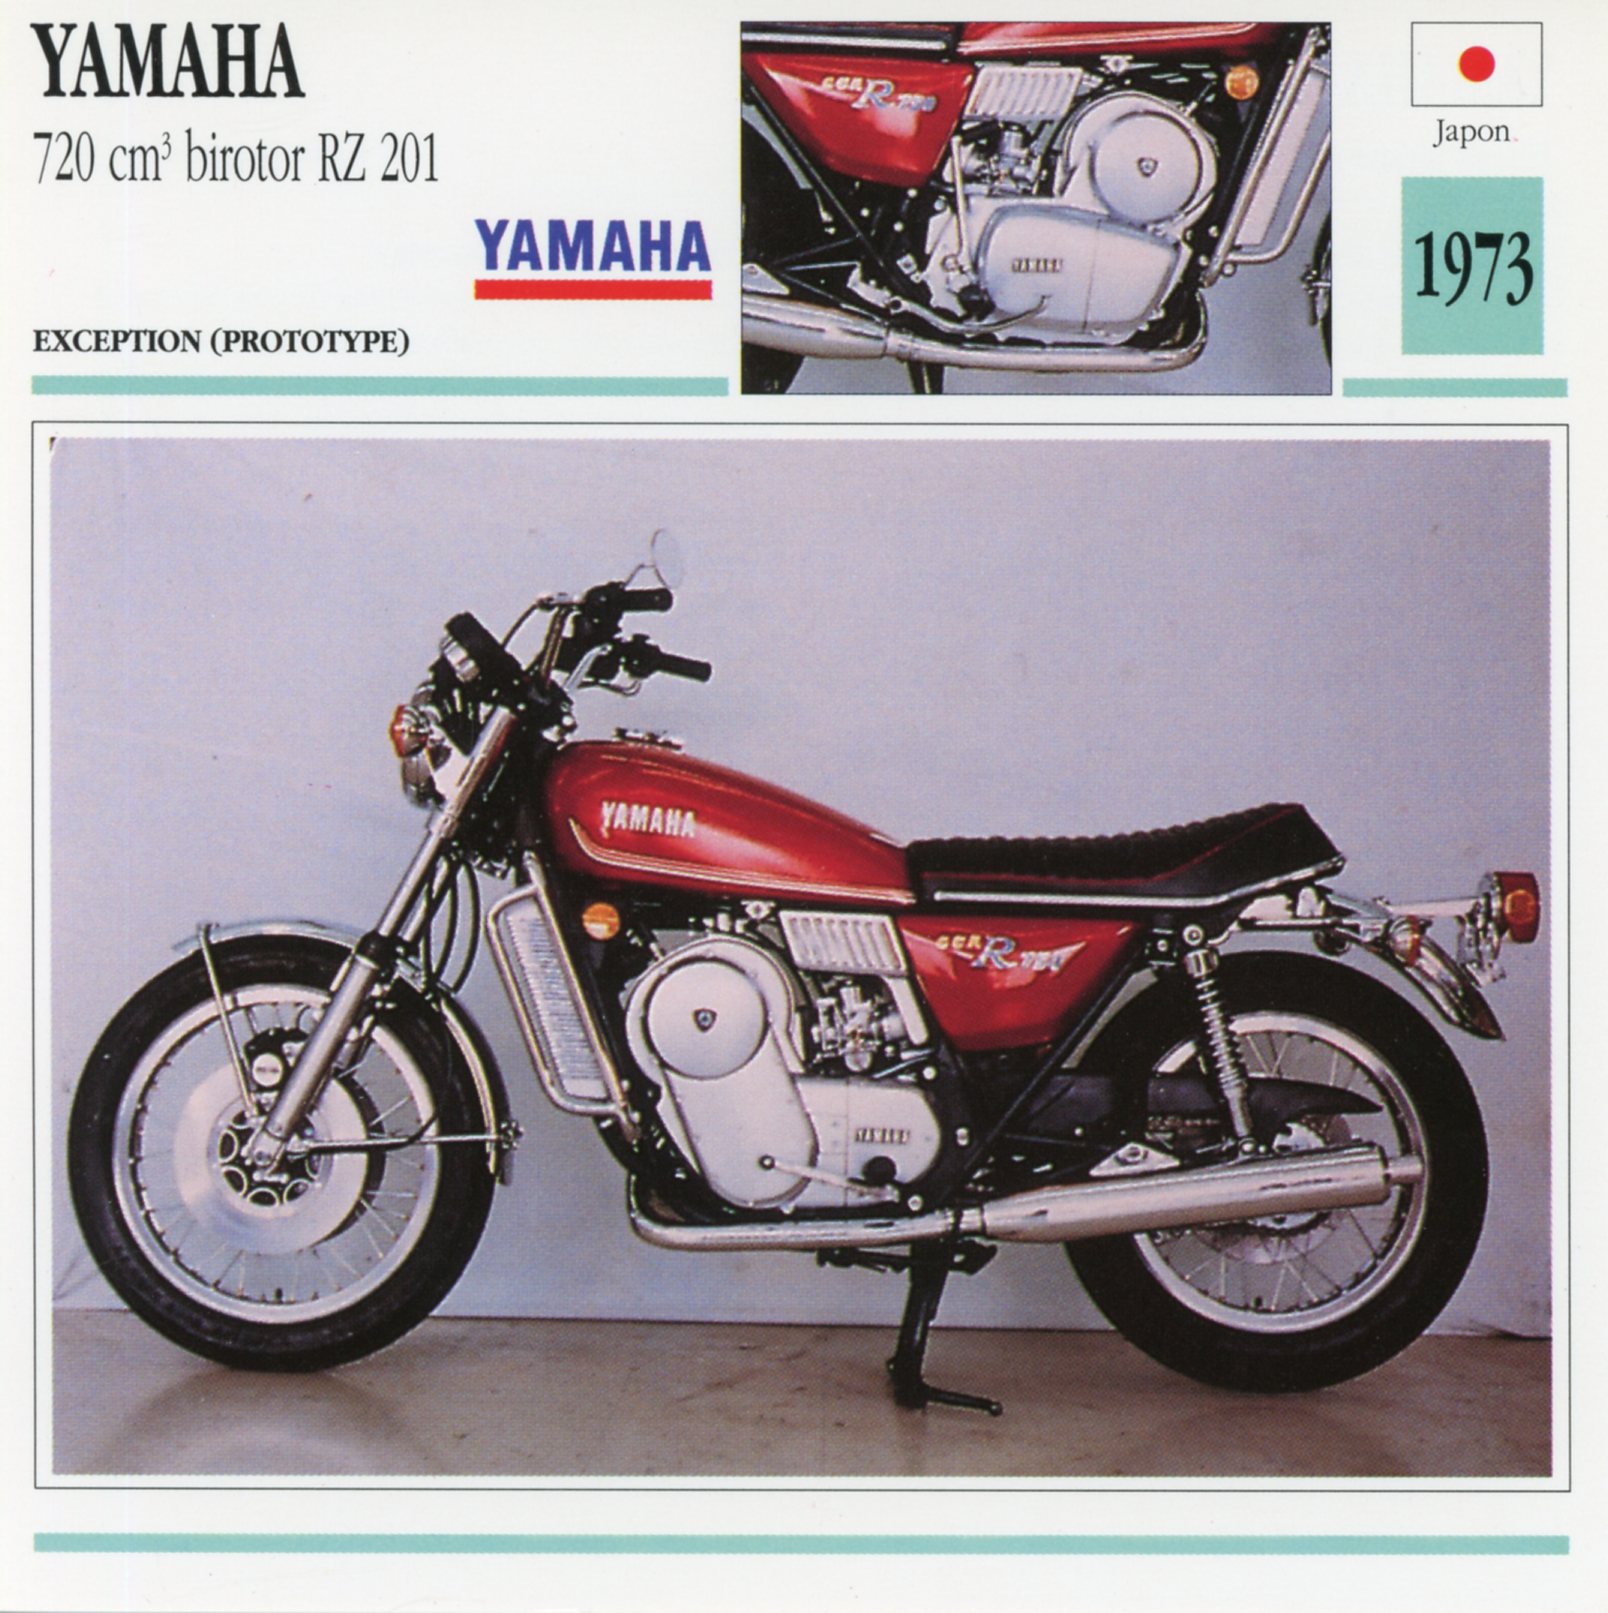 FICHE-MOTO-YAMAHA-720-RZ-BIROTOR-1973-LEMASTERBROCKERS-littérature-brochure